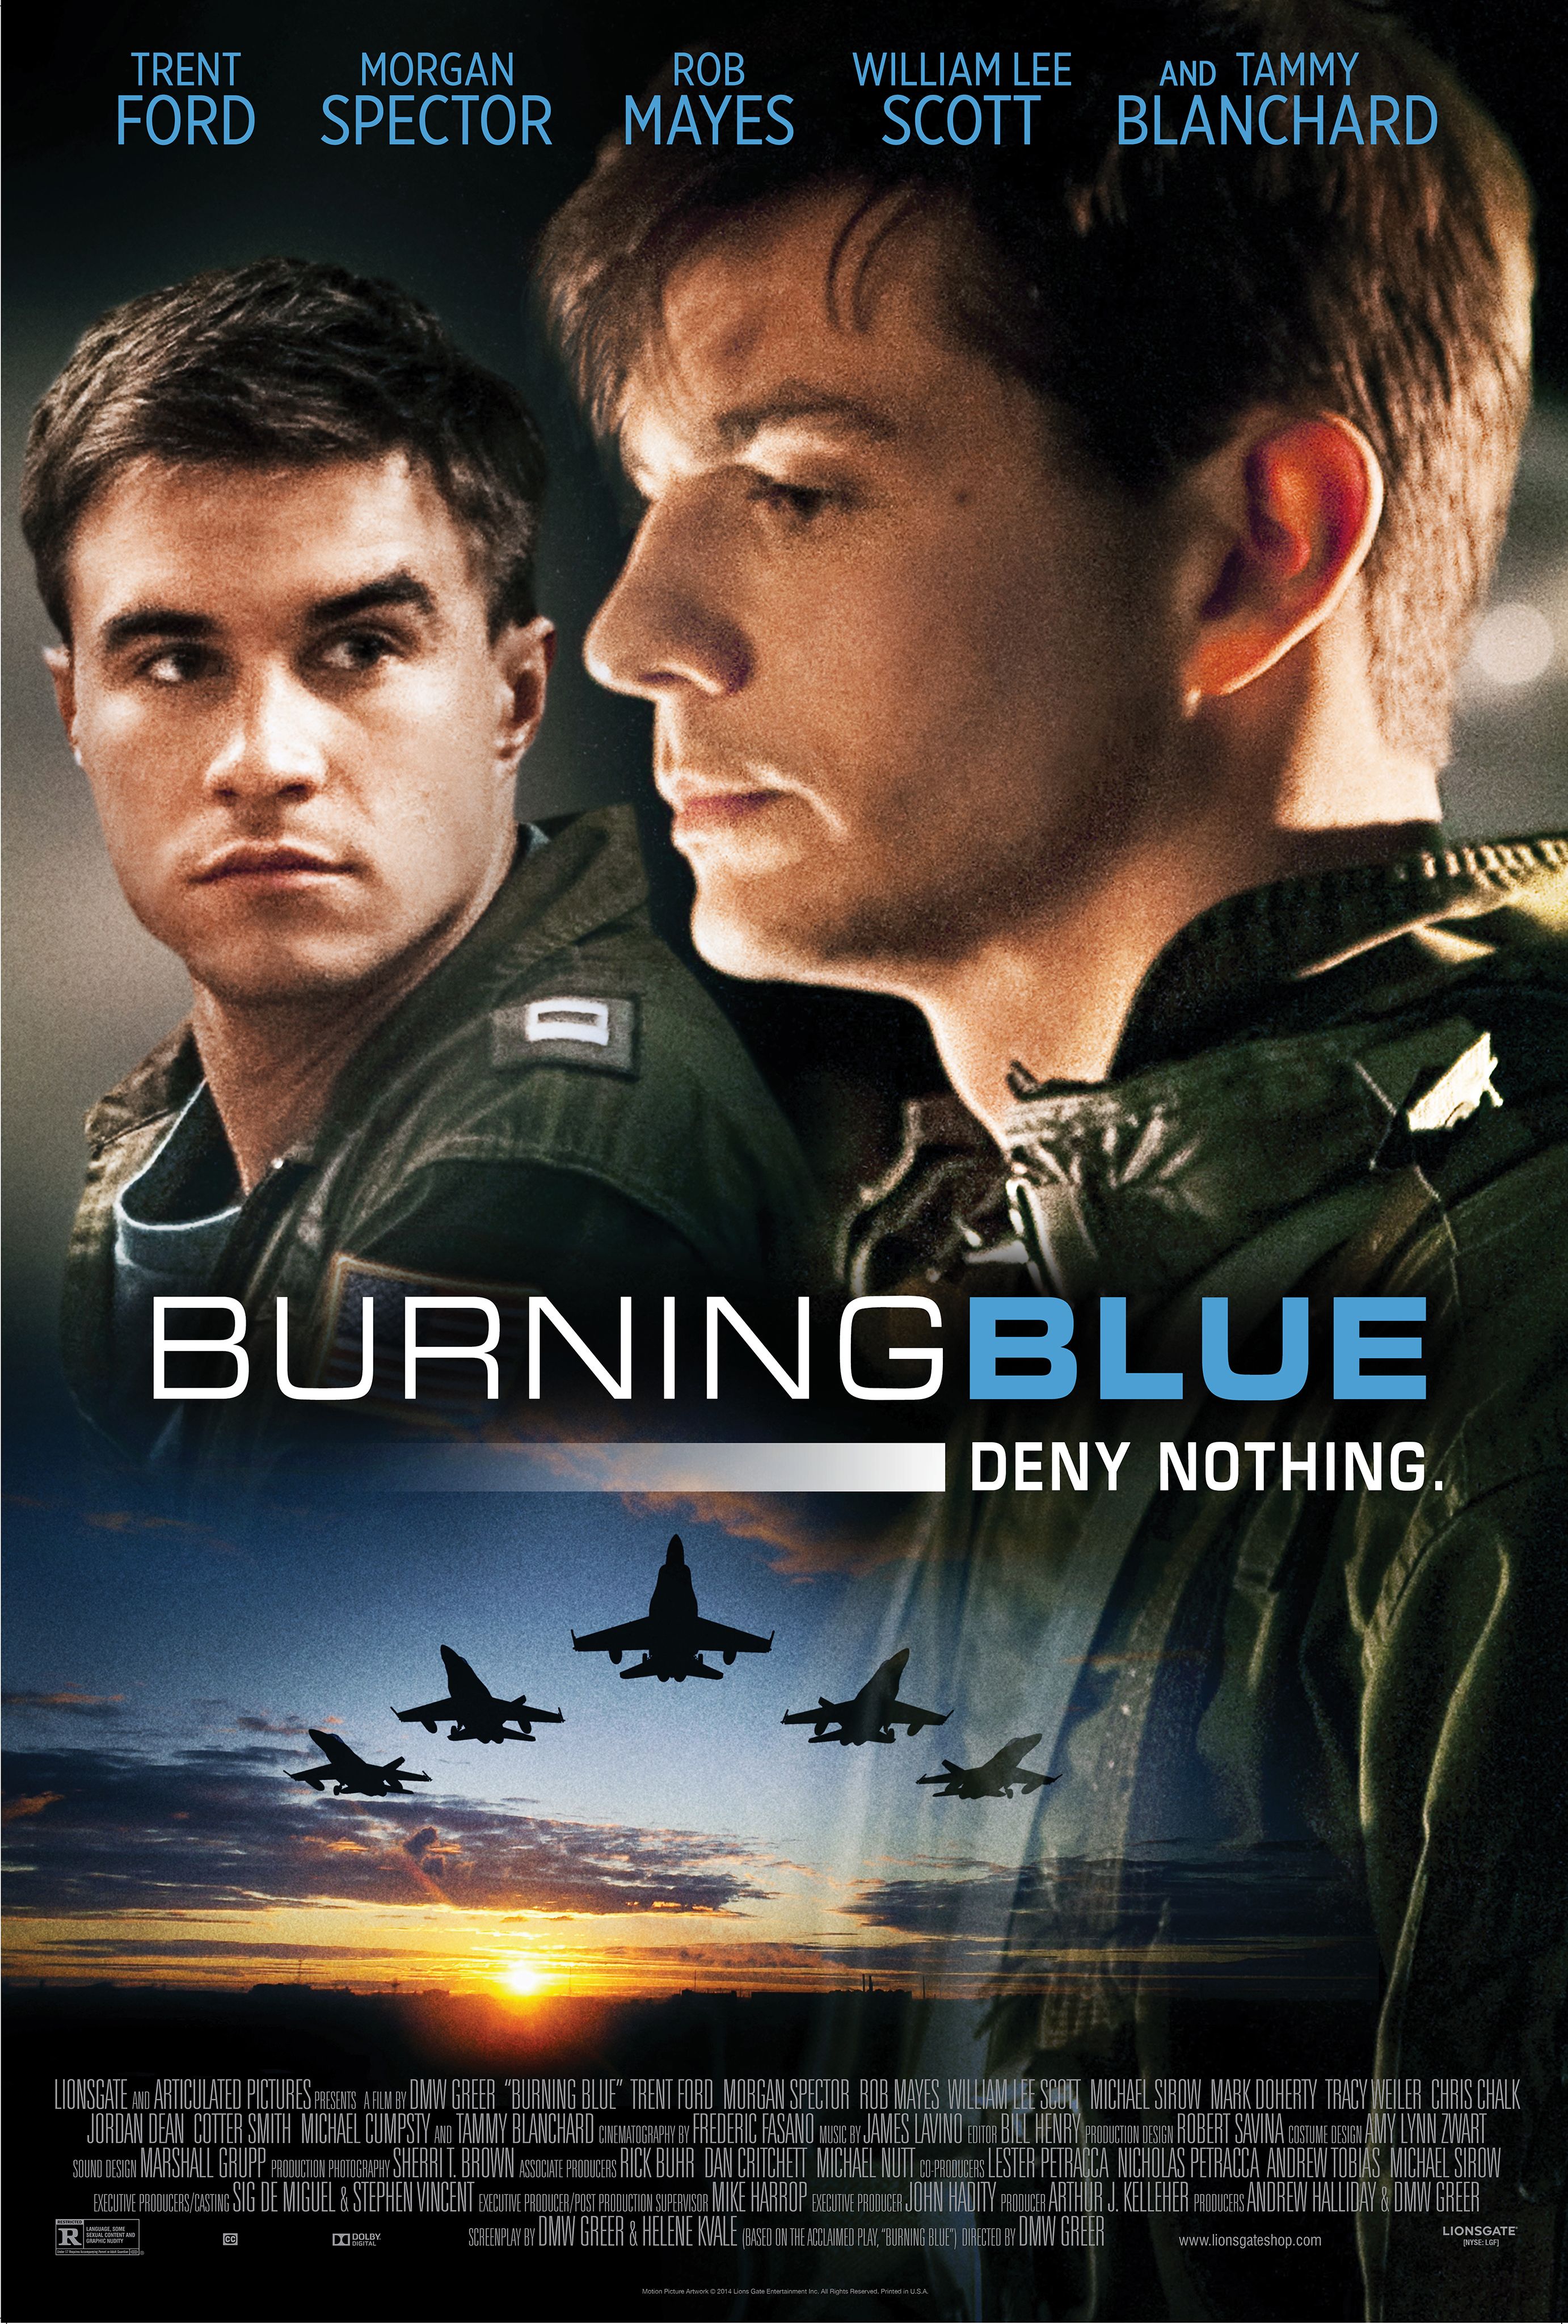 Nonton film Burning Blue layarkaca21 indoxx1 ganool online streaming terbaru